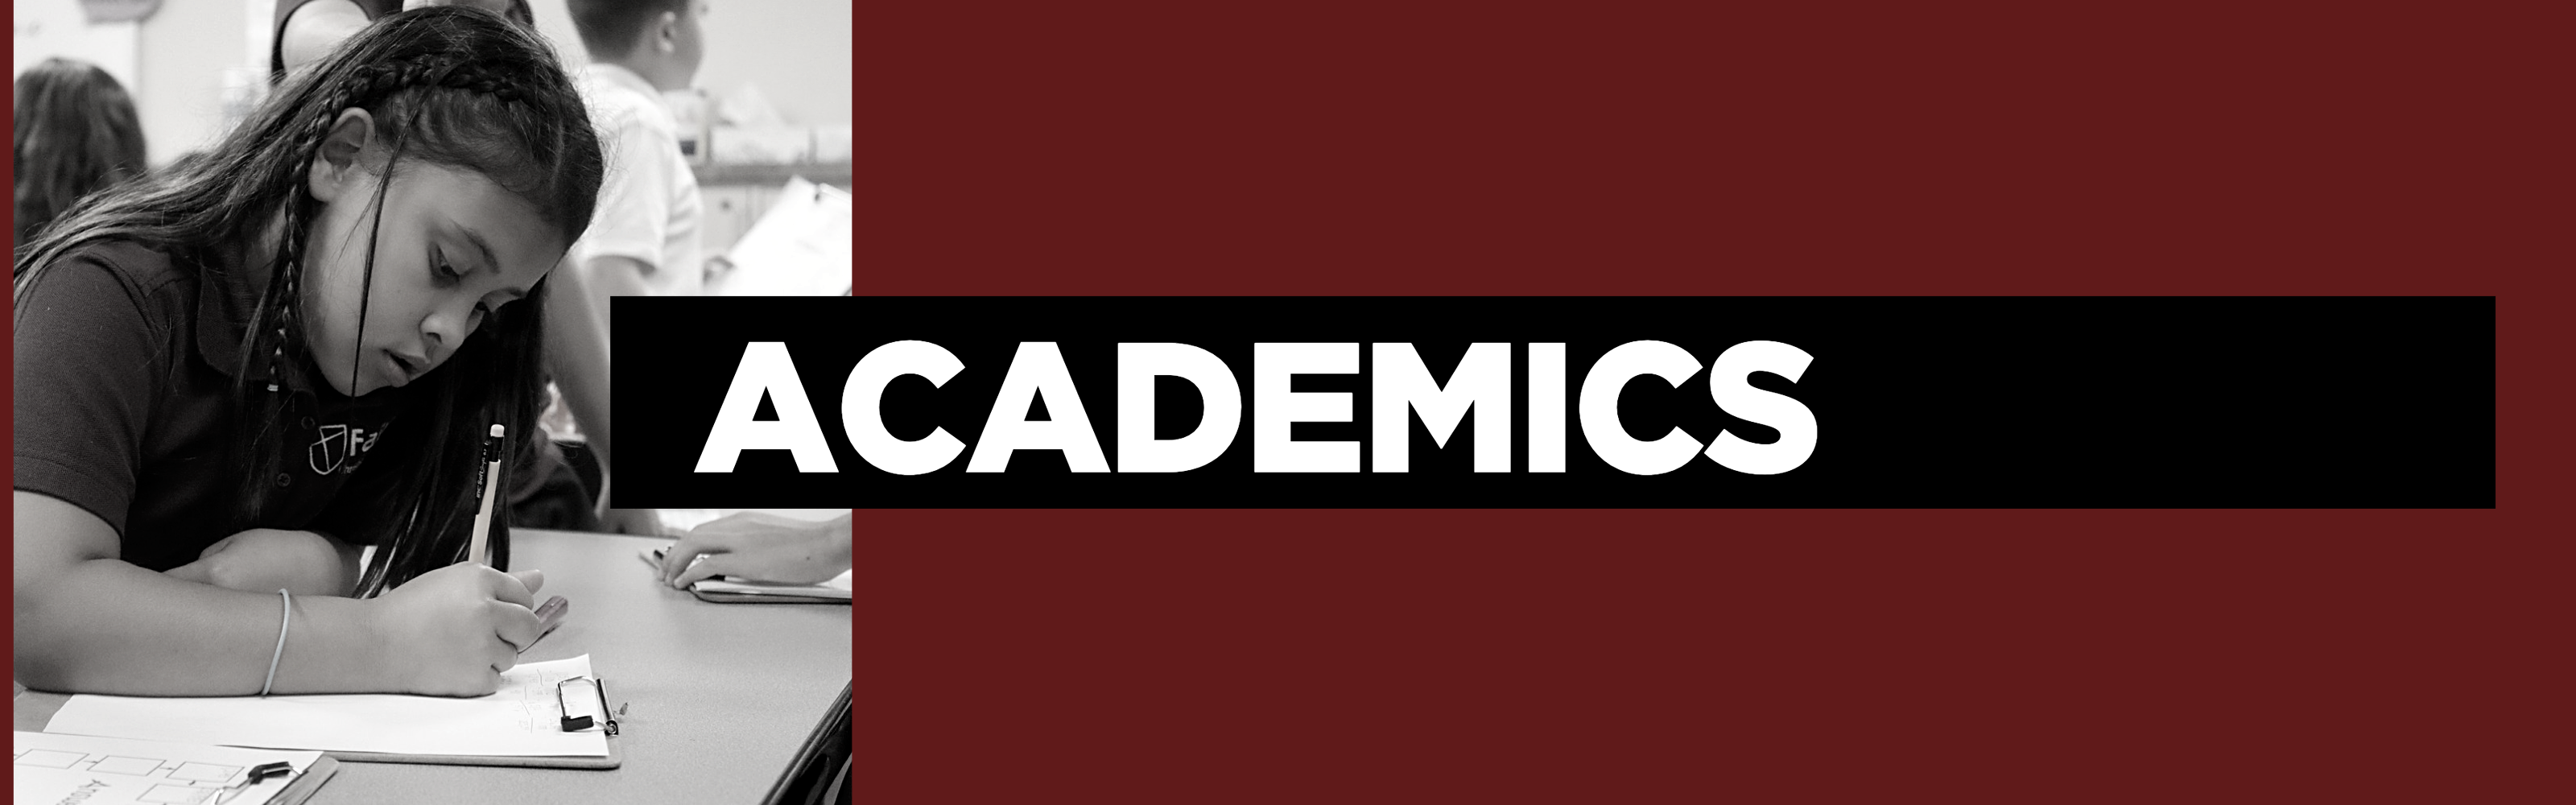 academics banner